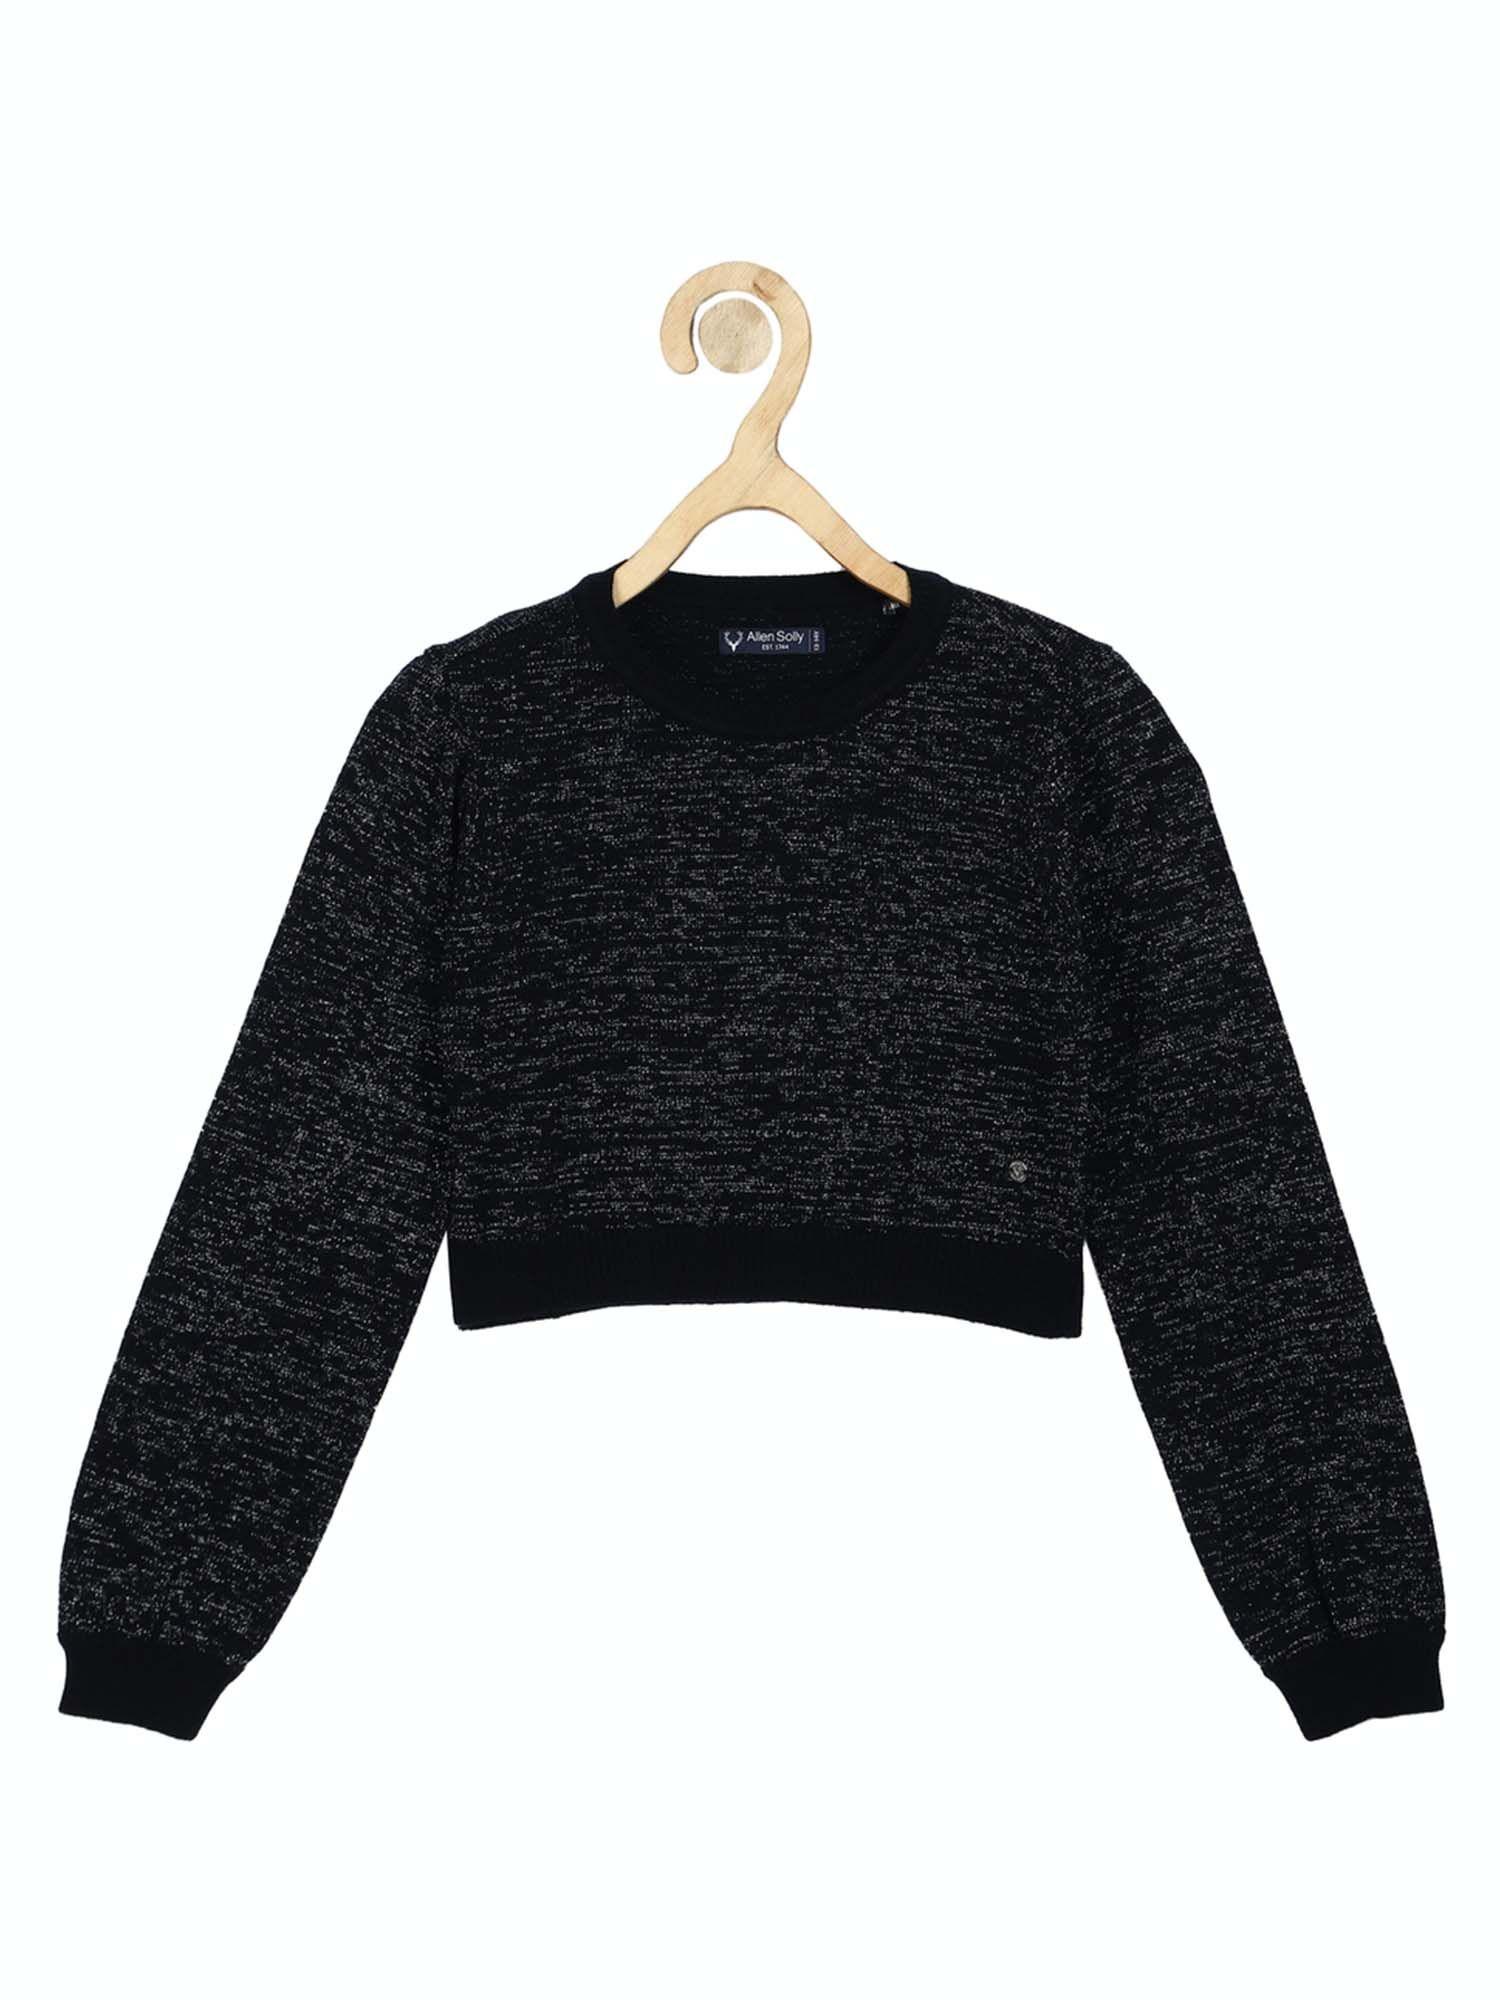 black-sweater